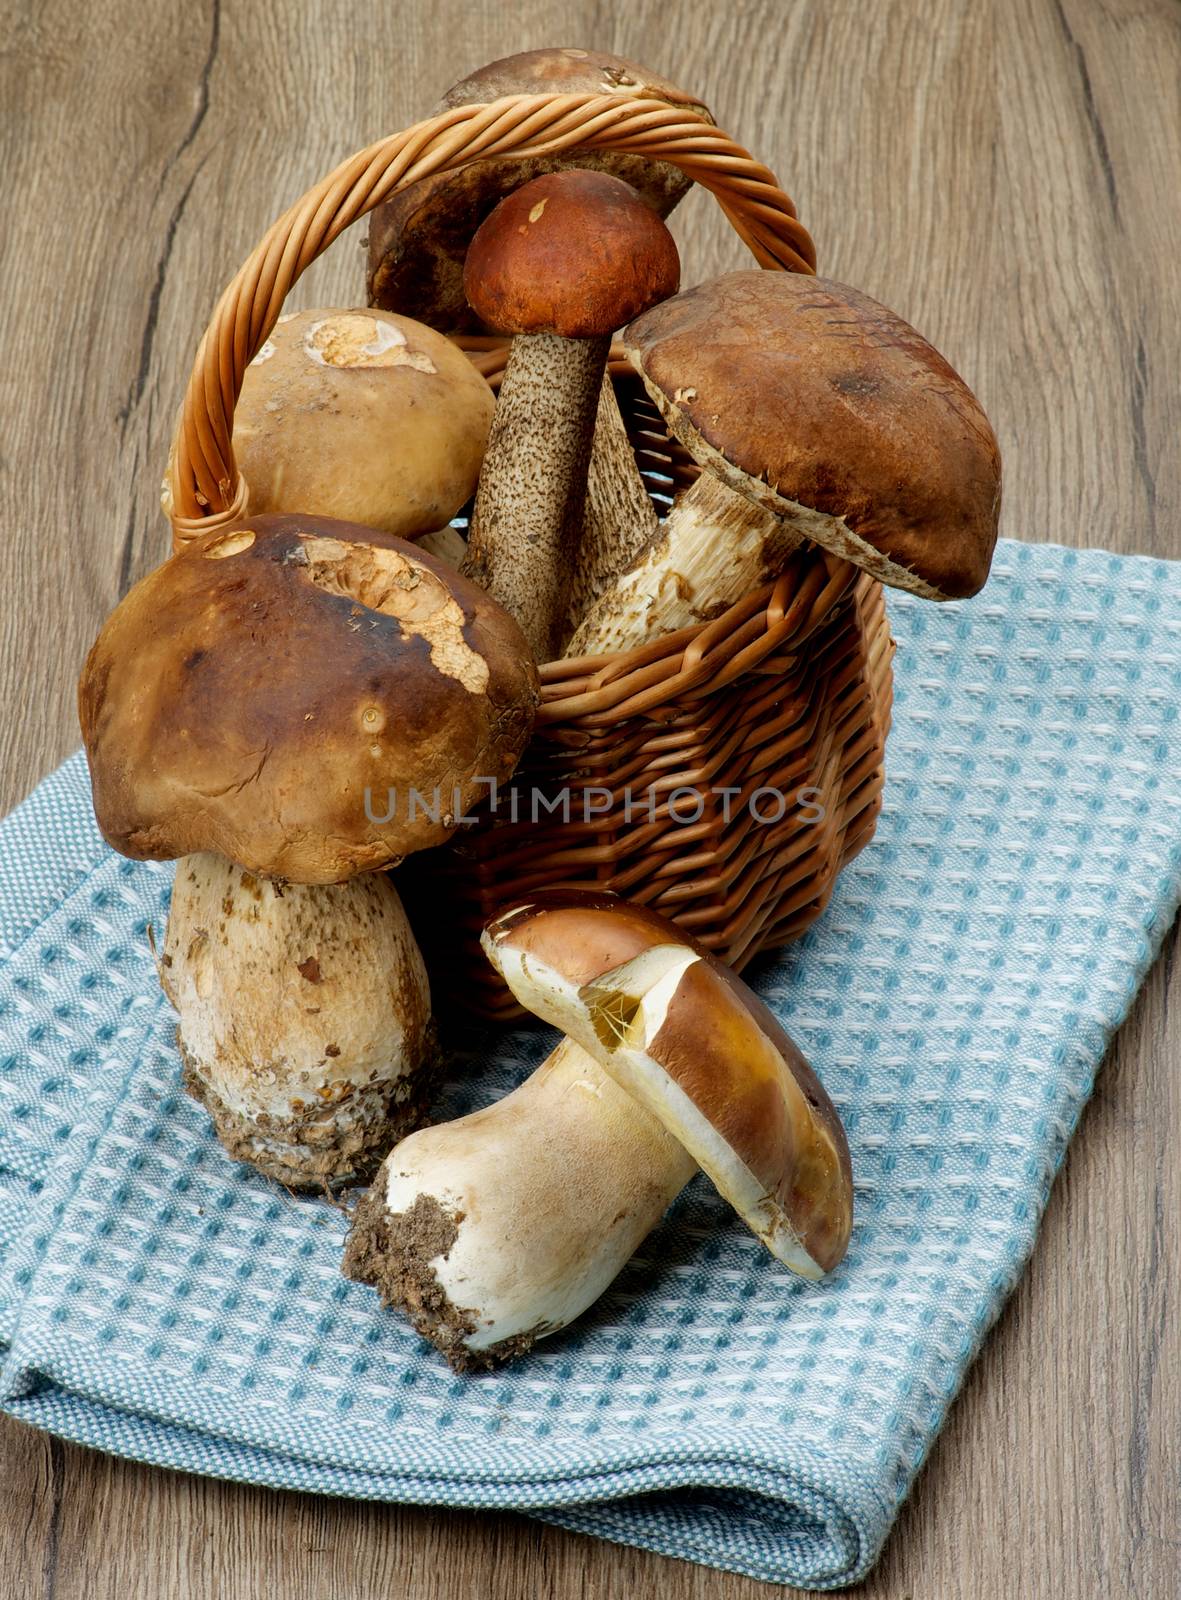 Forest Mushrooms by zhekos